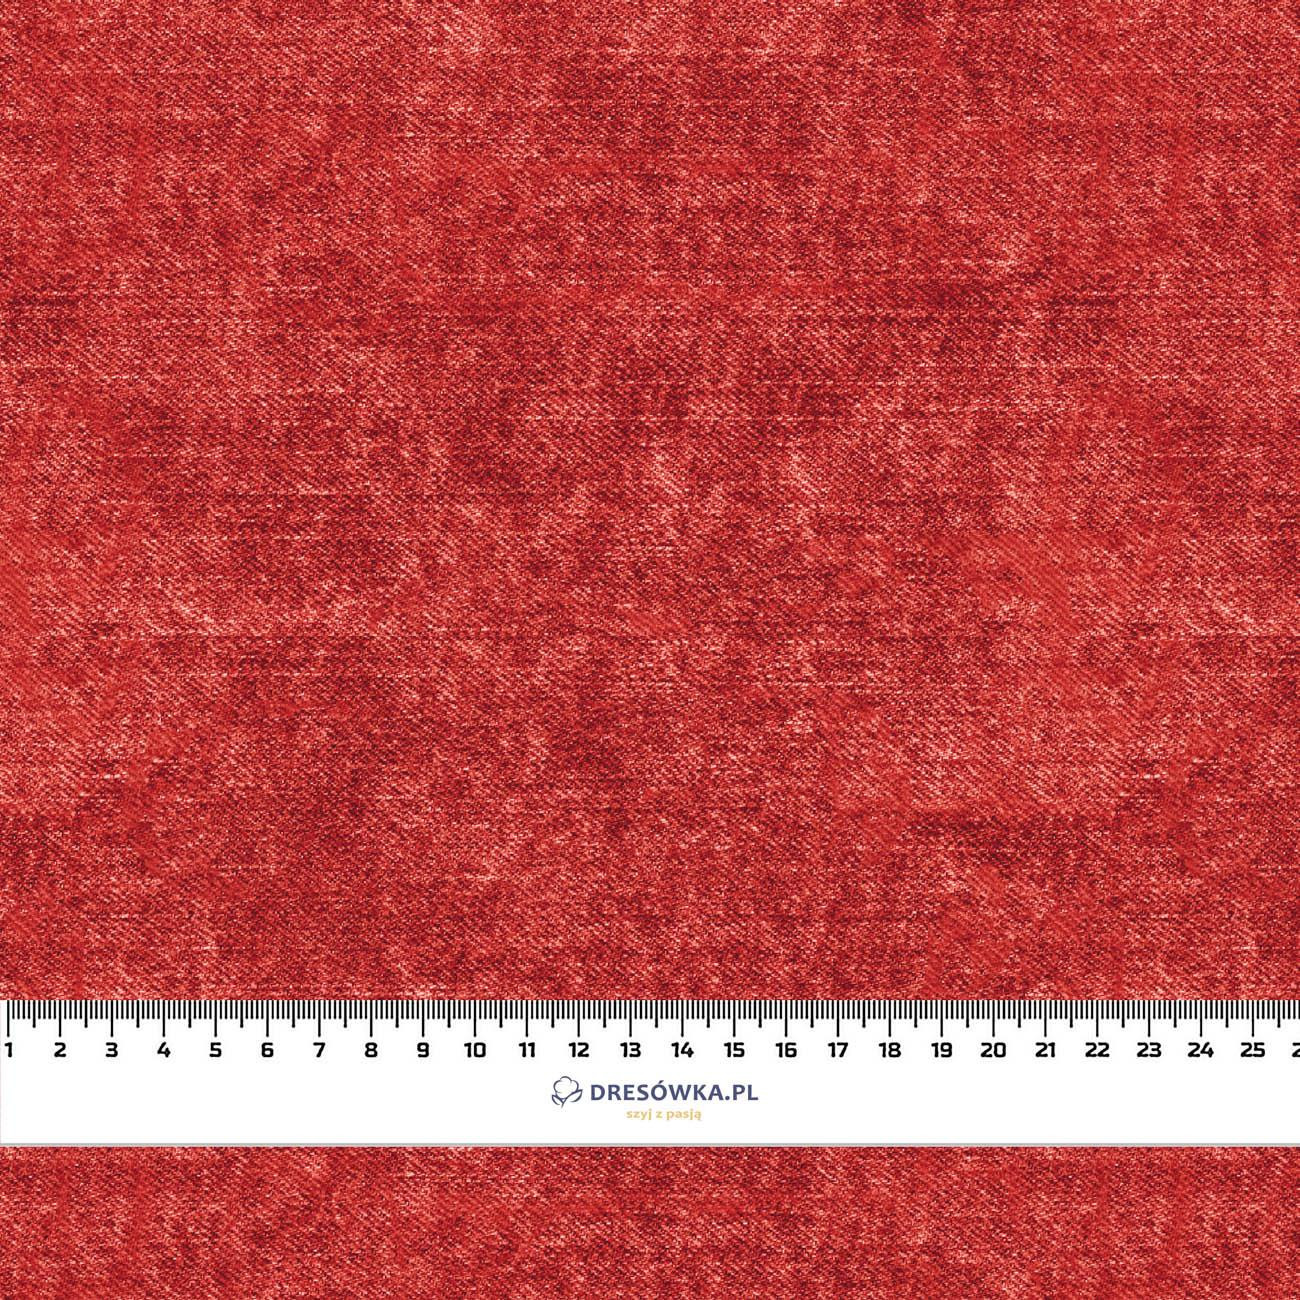 ACID WASH / RED - Waterproof woven fabric